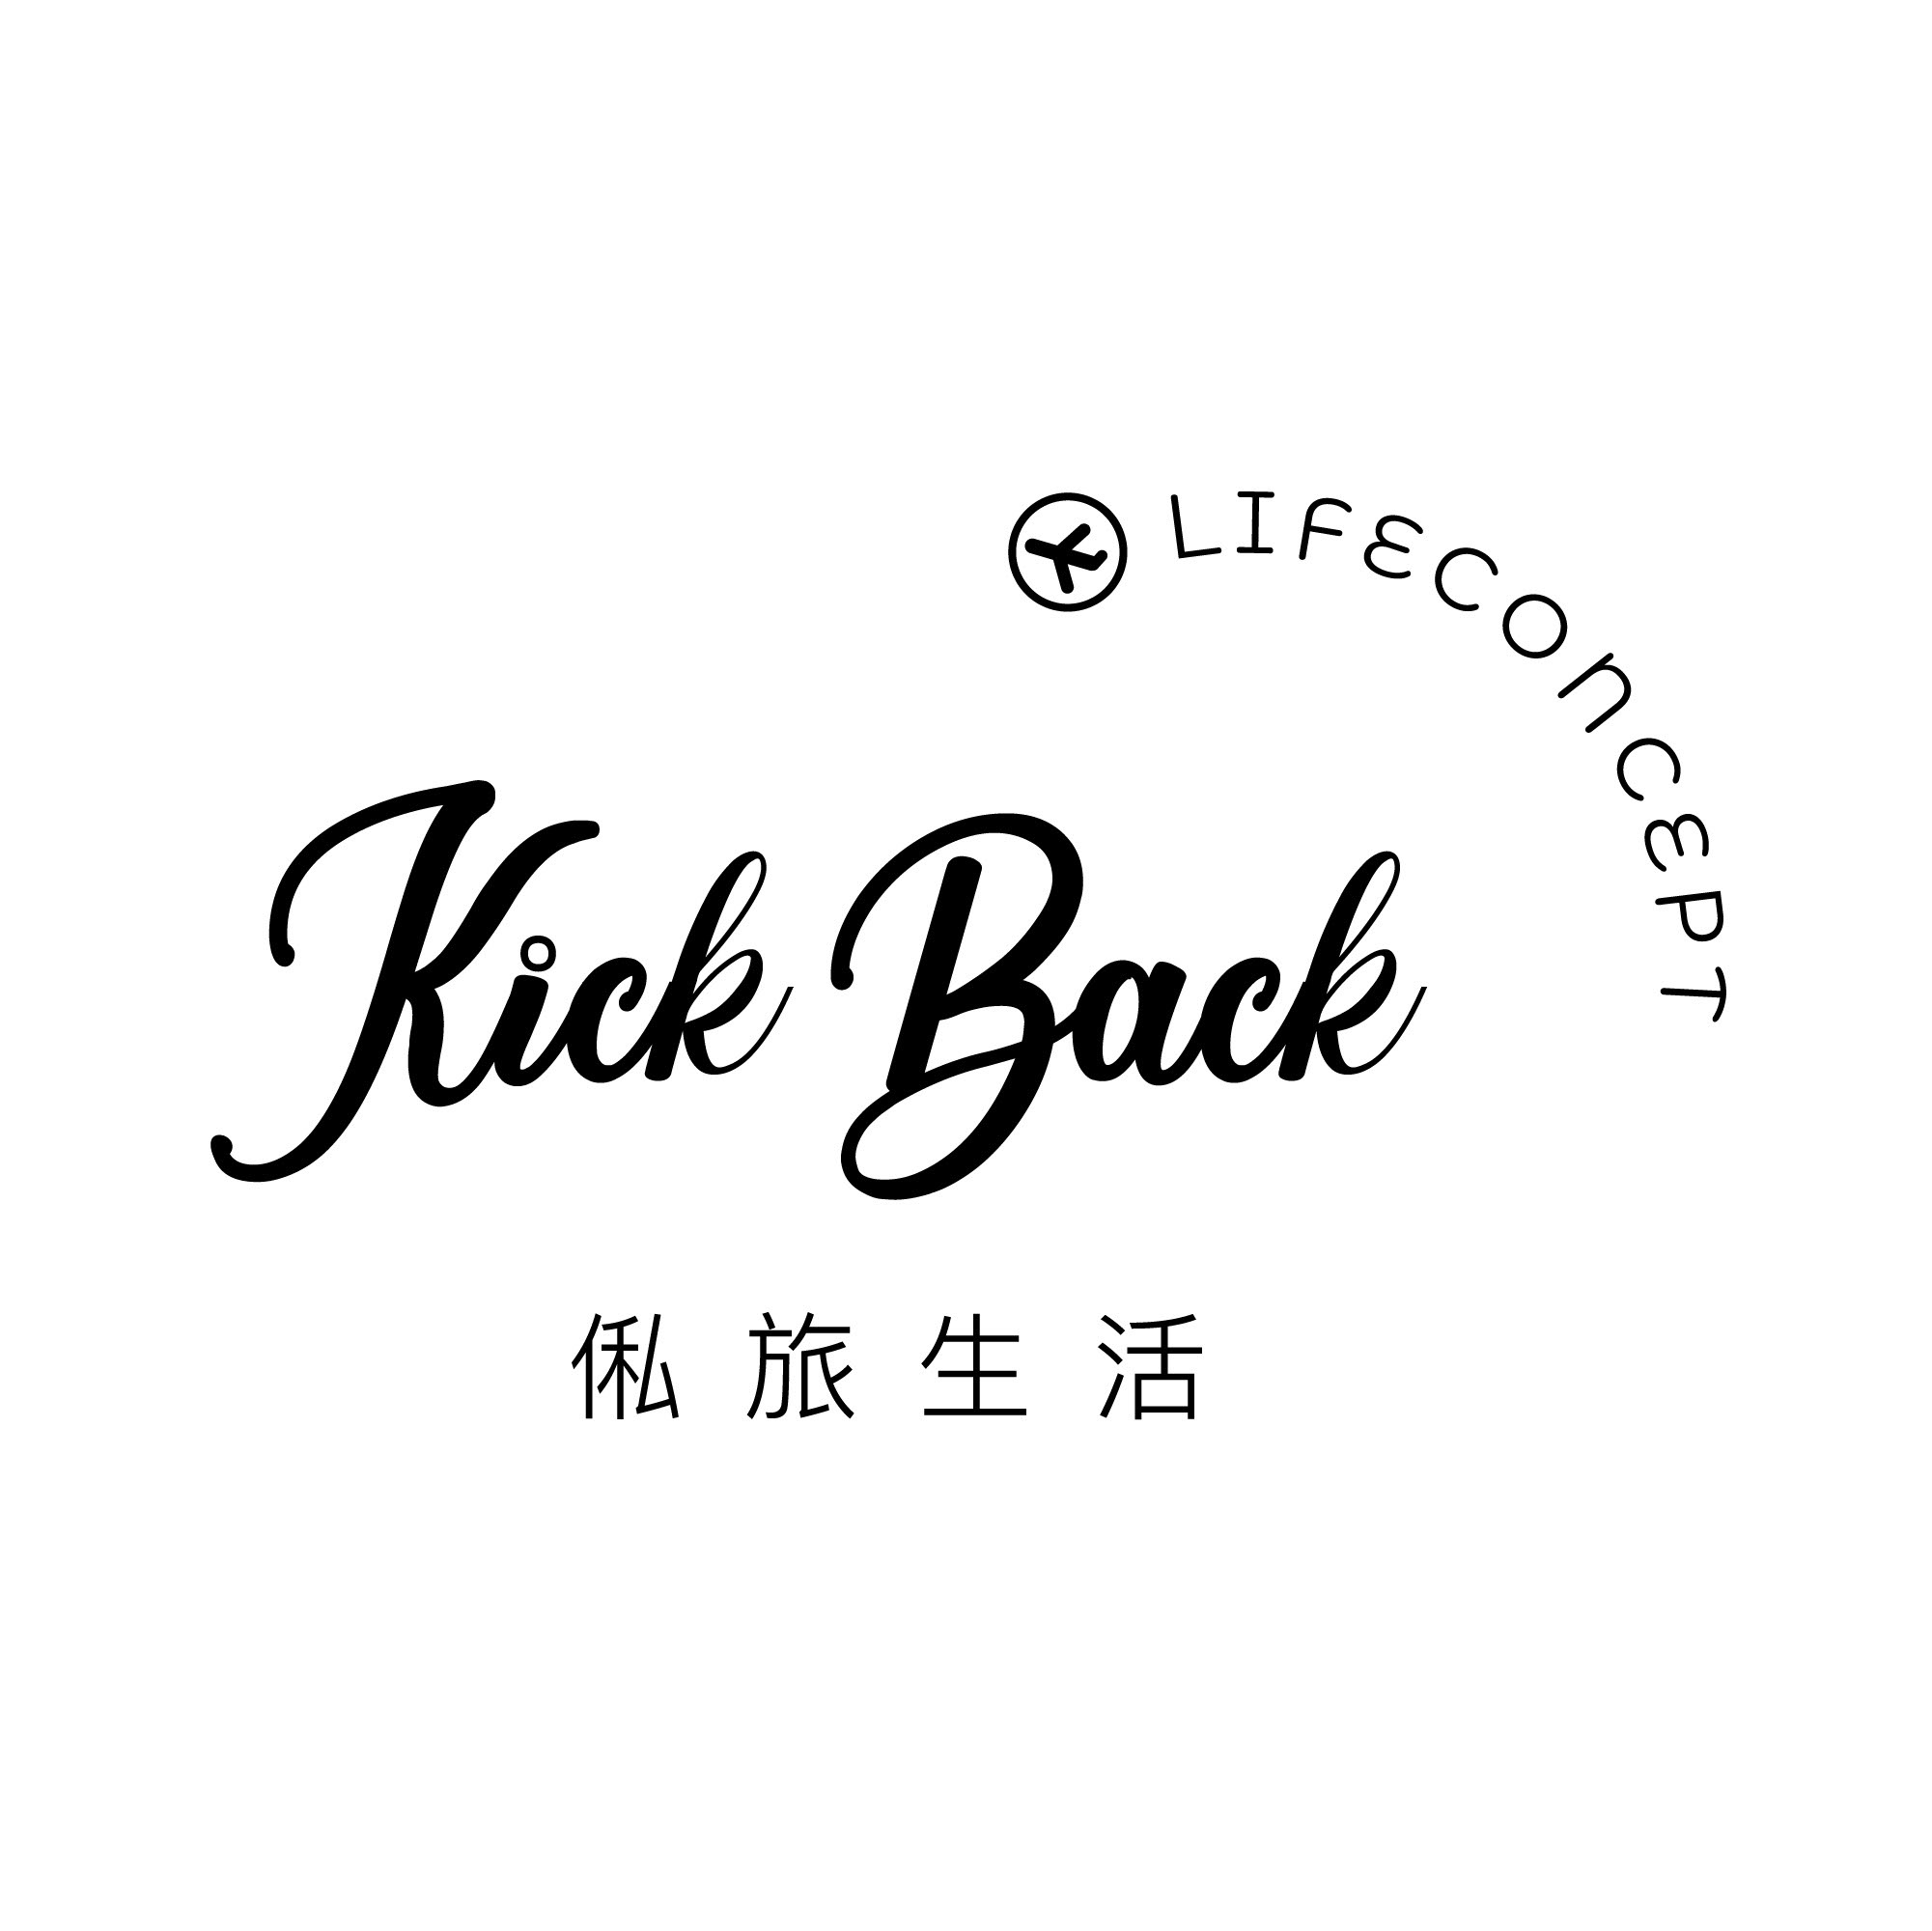 KickBack俬旅生活